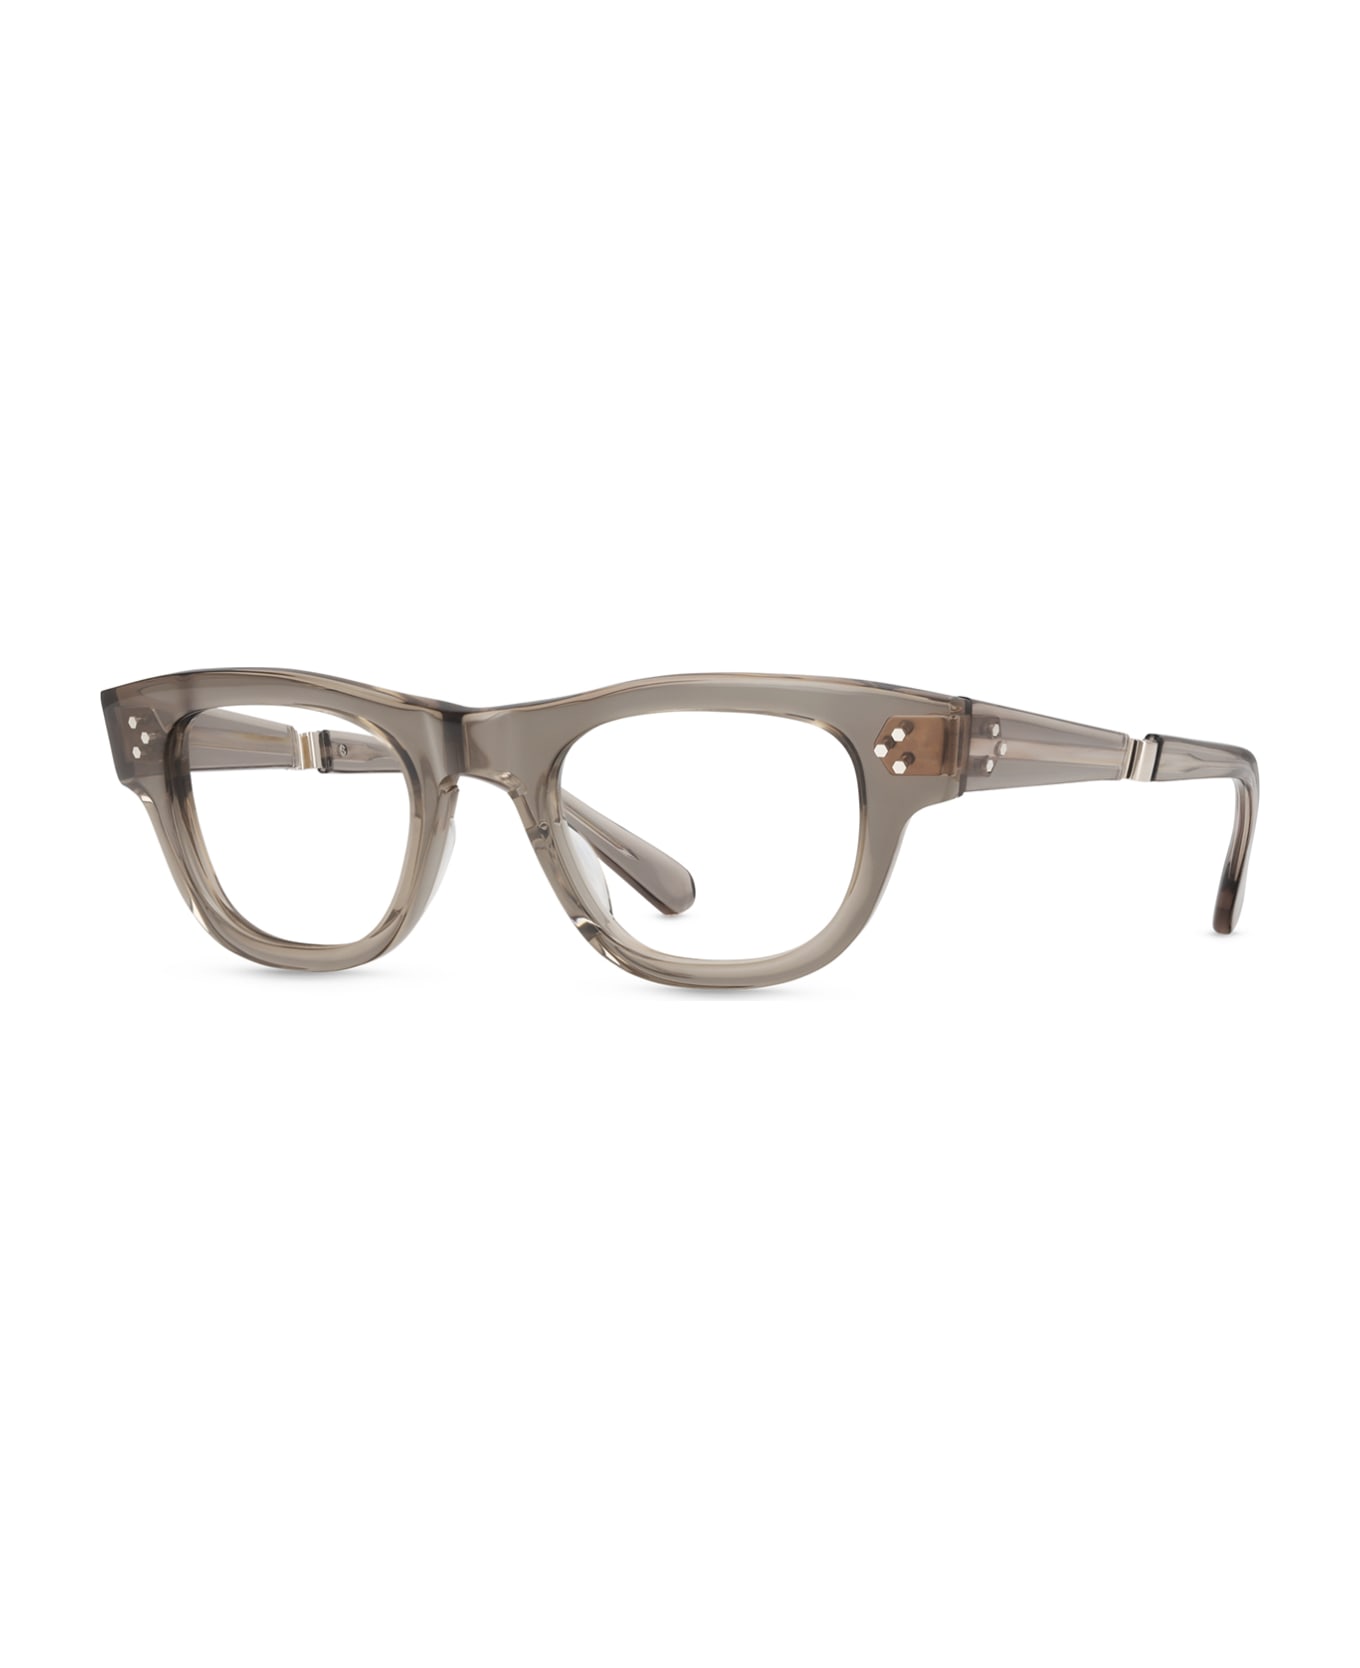 Mr. Leight Waimea C Grey Crystal-12k Grey Gold Glasses - Grey Crystal-12K Grey Gold